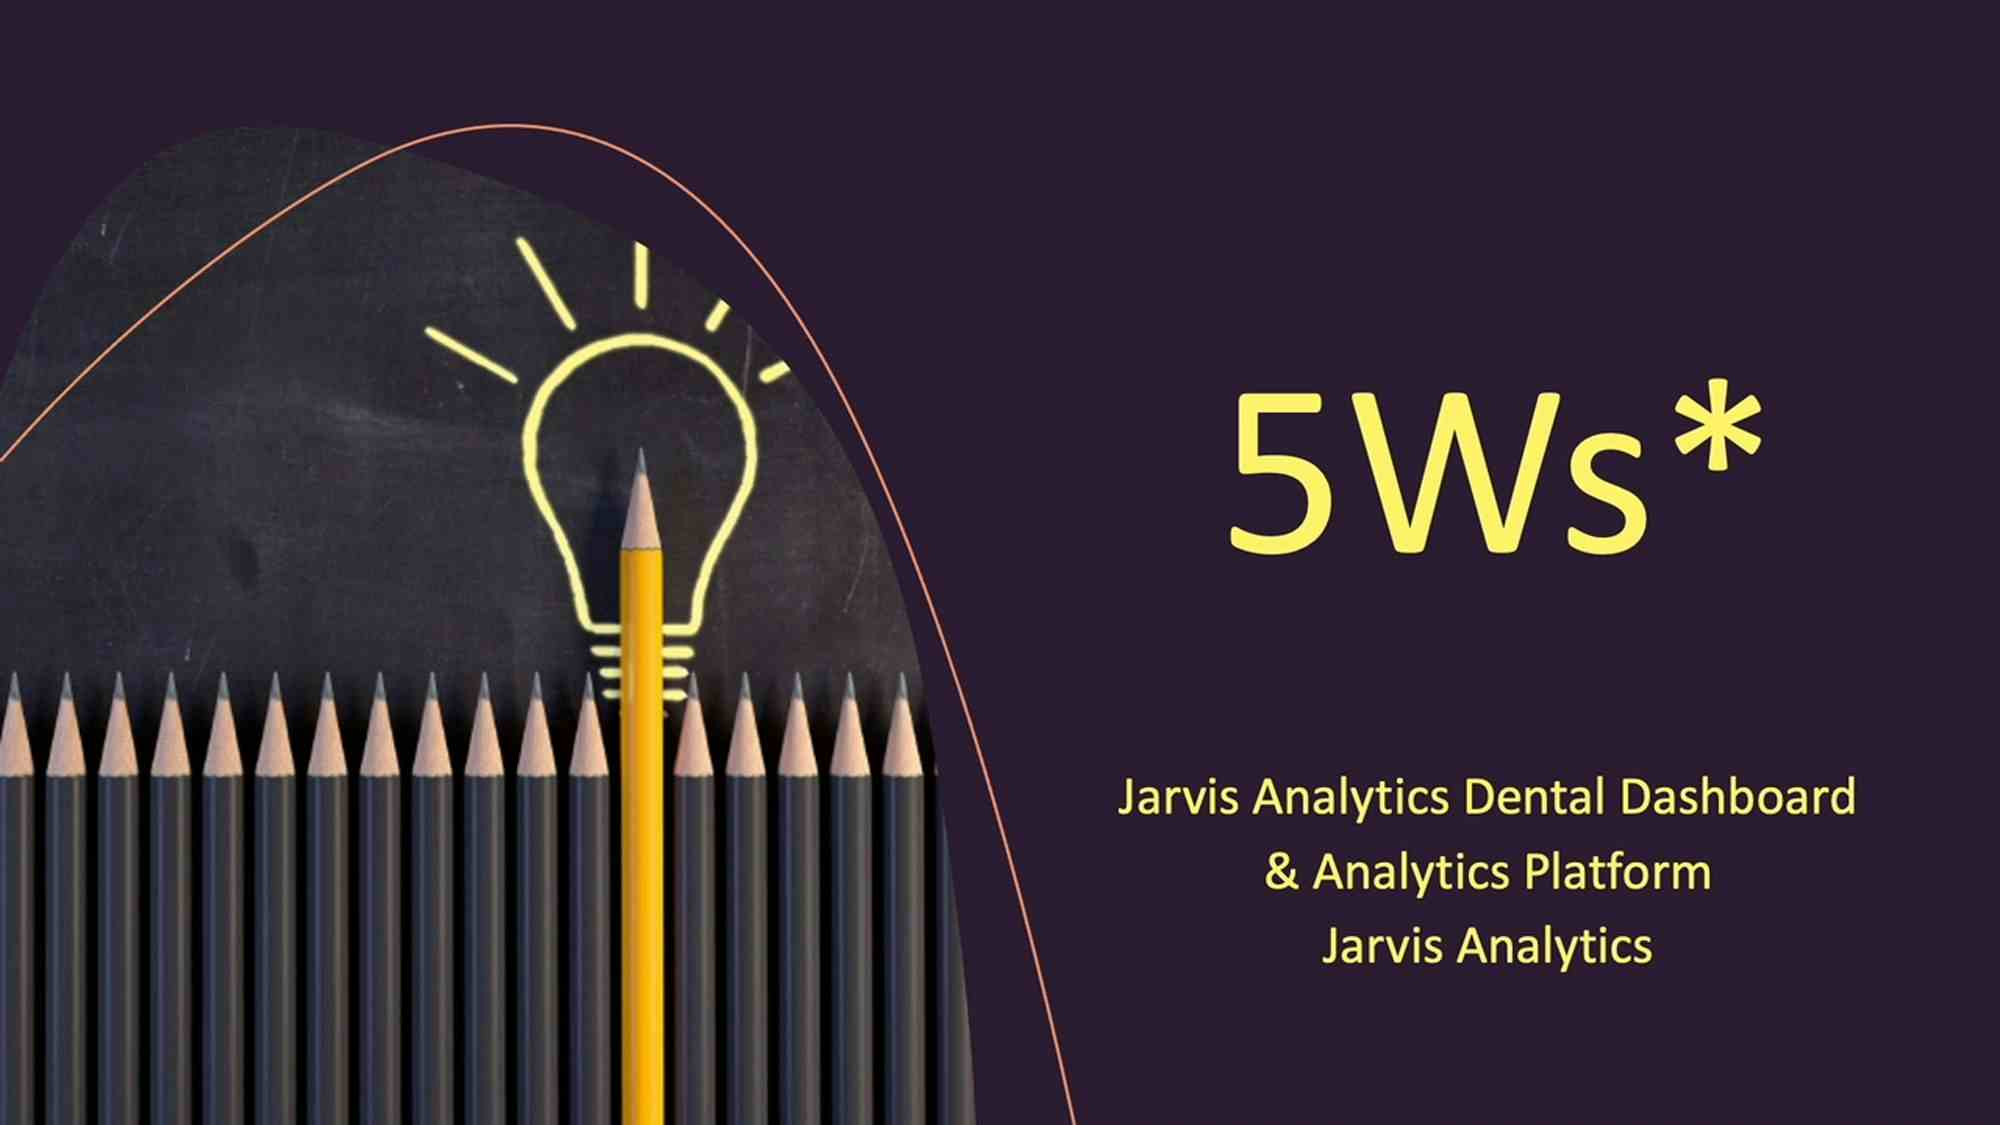 5Ws* Video - Jarvis Analytics